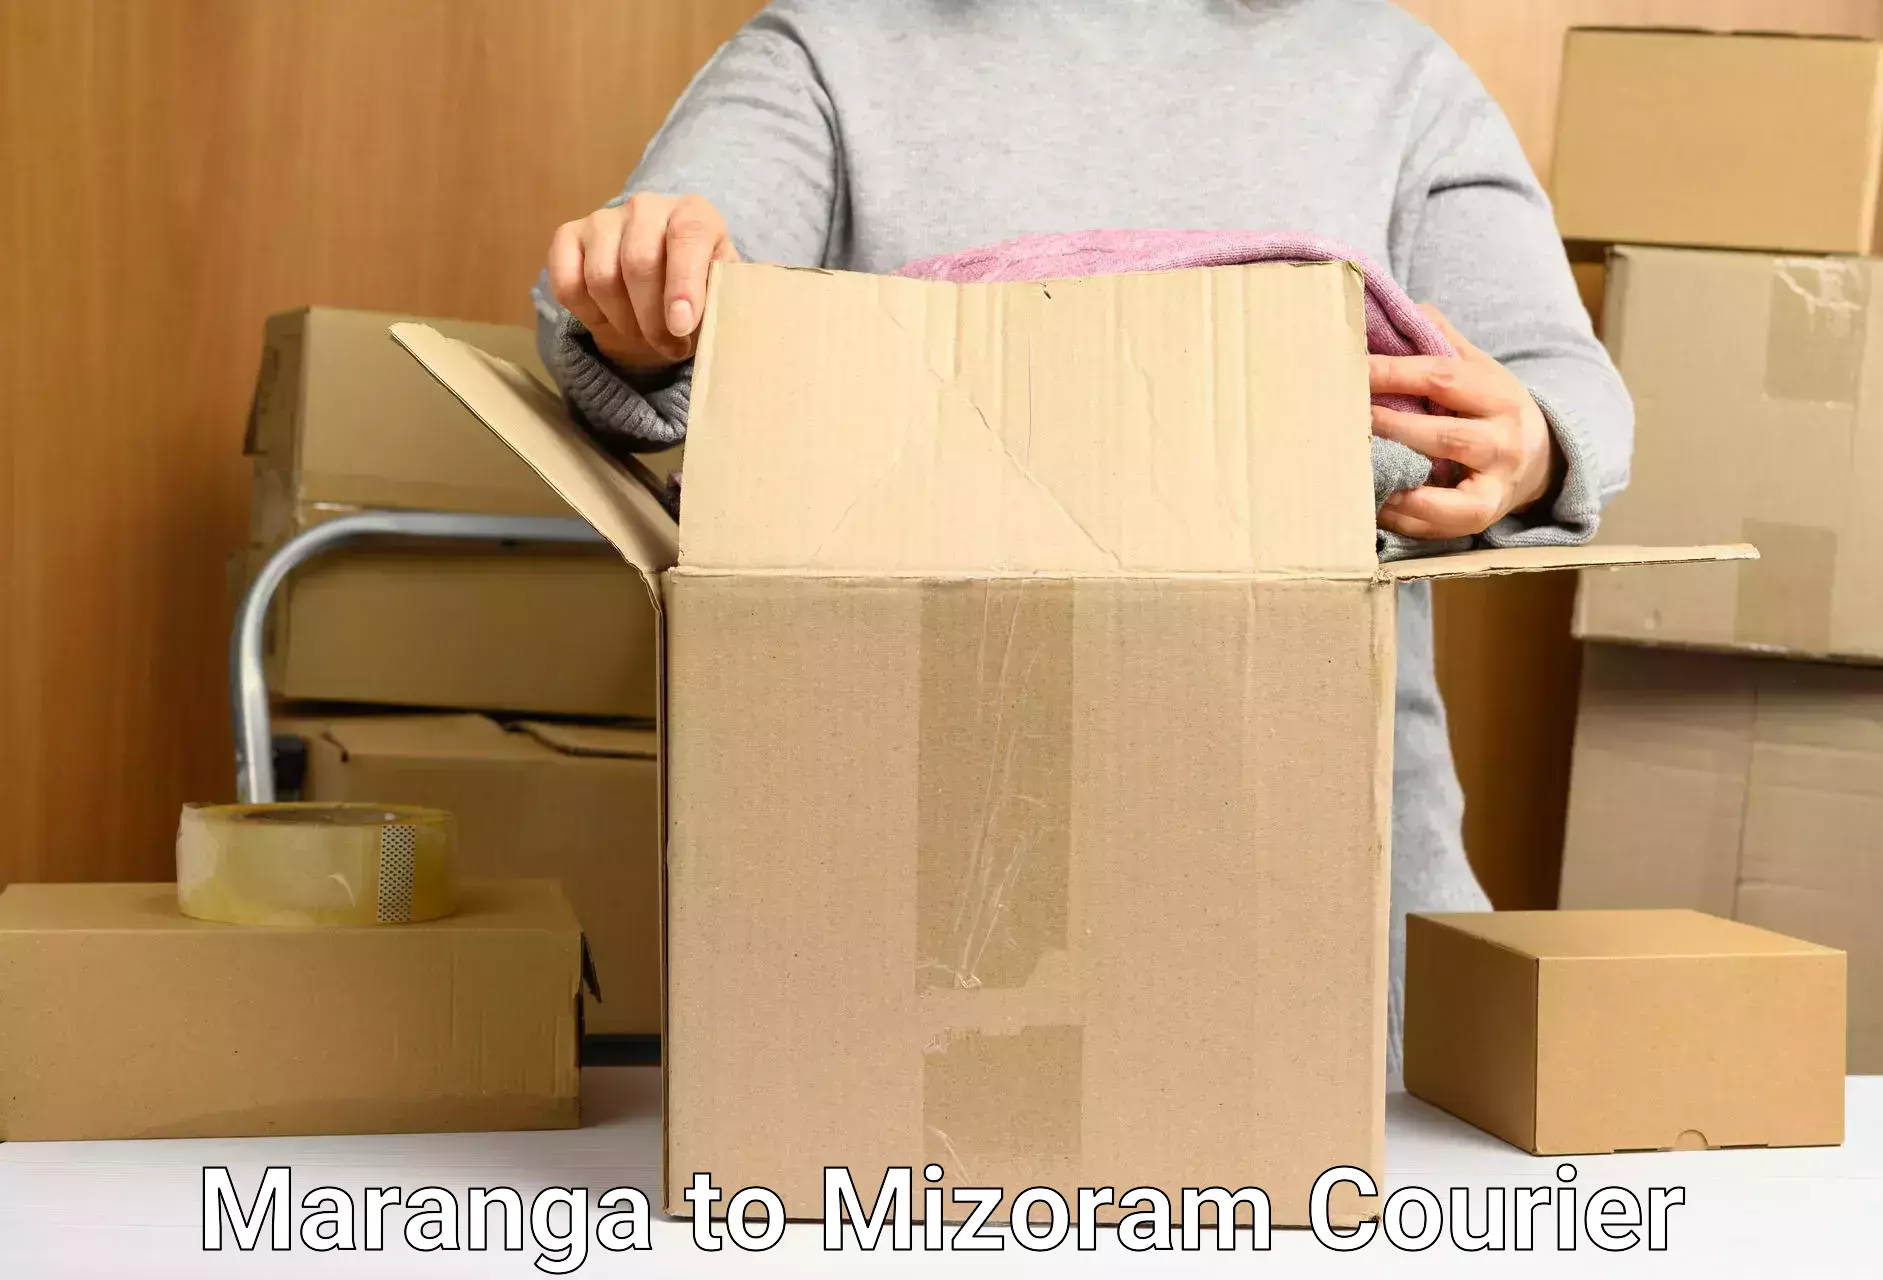 Courier service comparison Maranga to Mizoram